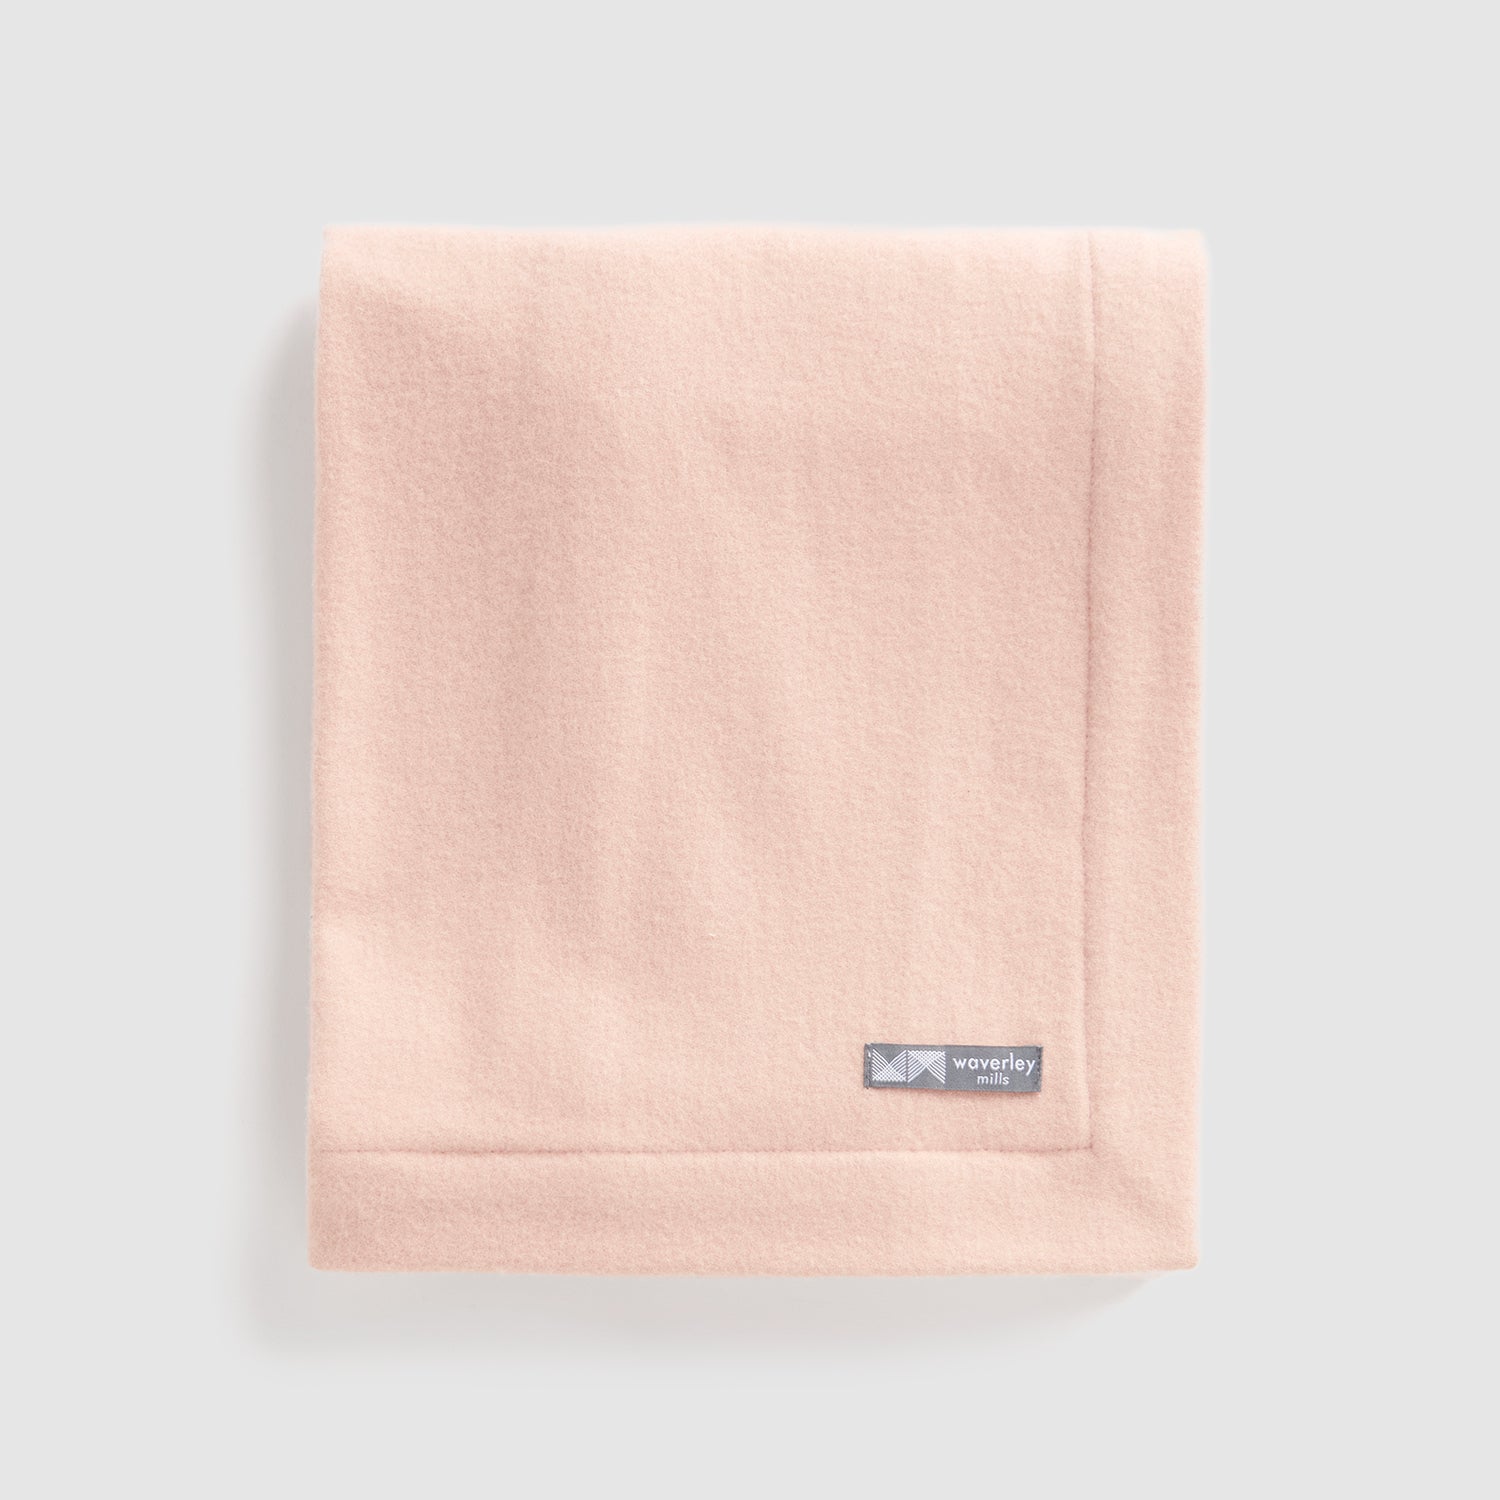 Folded merino wool baby blanket nest in pink.